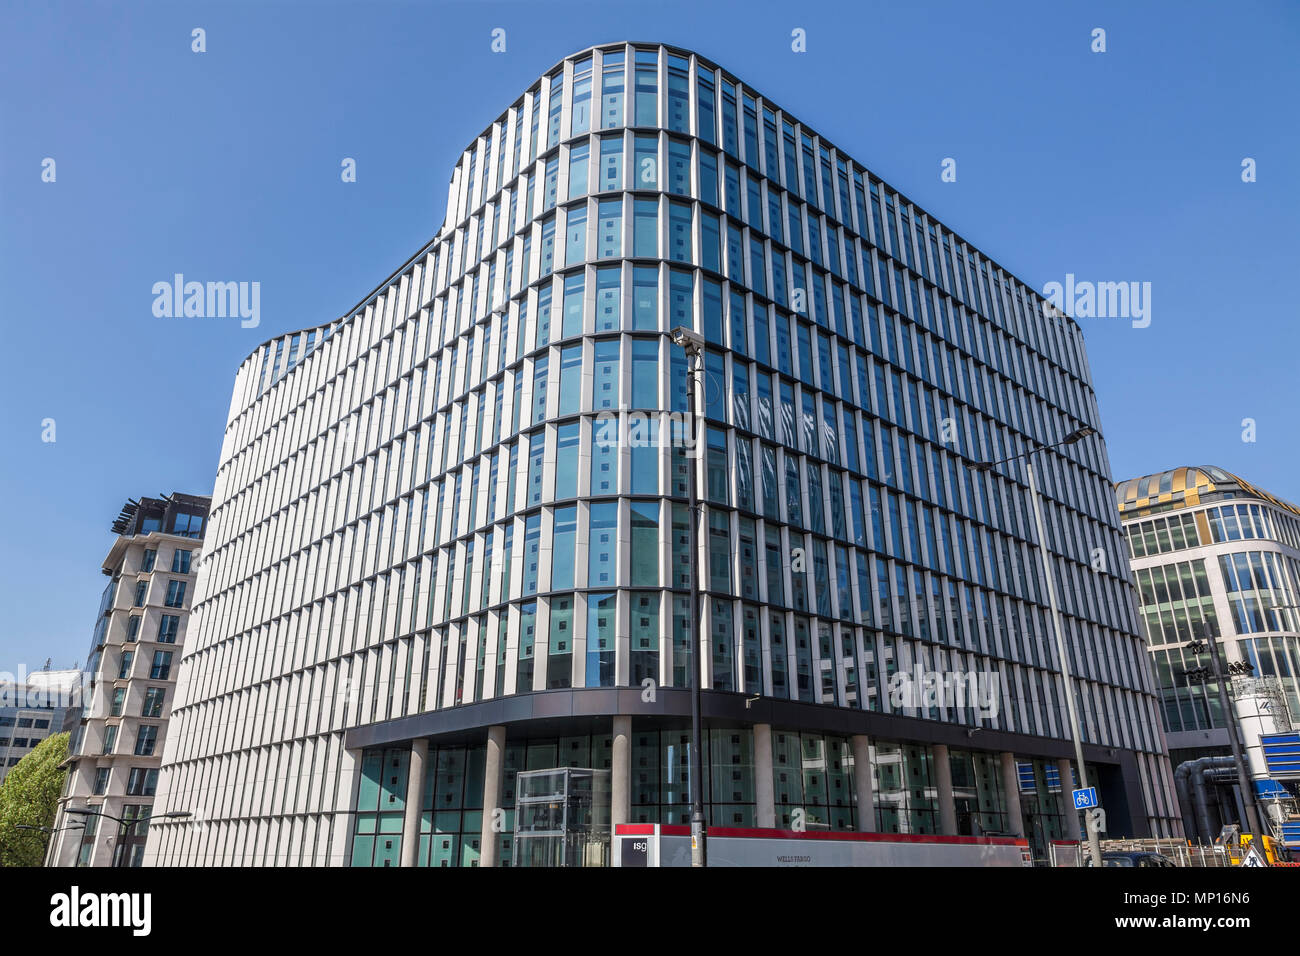 New Wells Fargo European headquarters on London Bridge Stock Photo